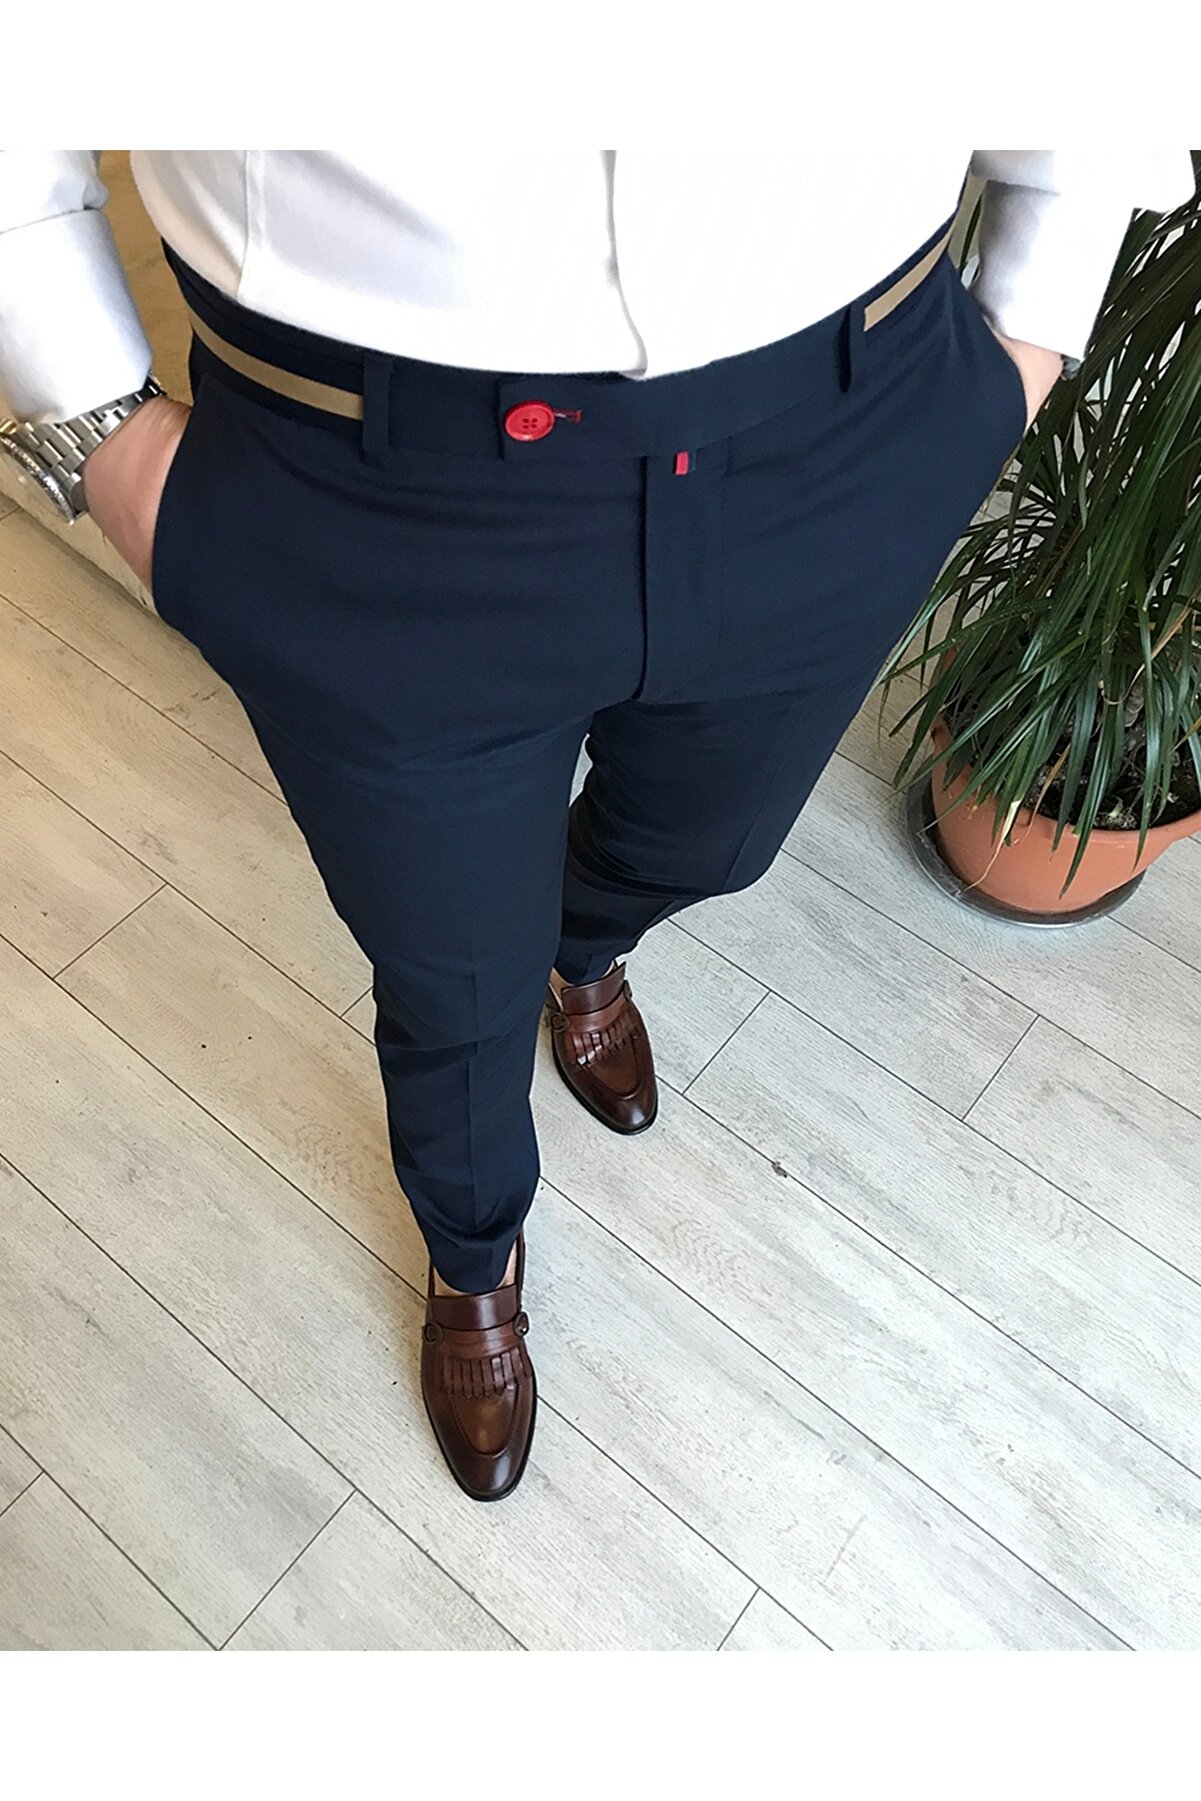 TerziAdemAltun İtalyan Stil Slim Fit Erkek Kumaş Pantolon Koyu Lacivert T4422